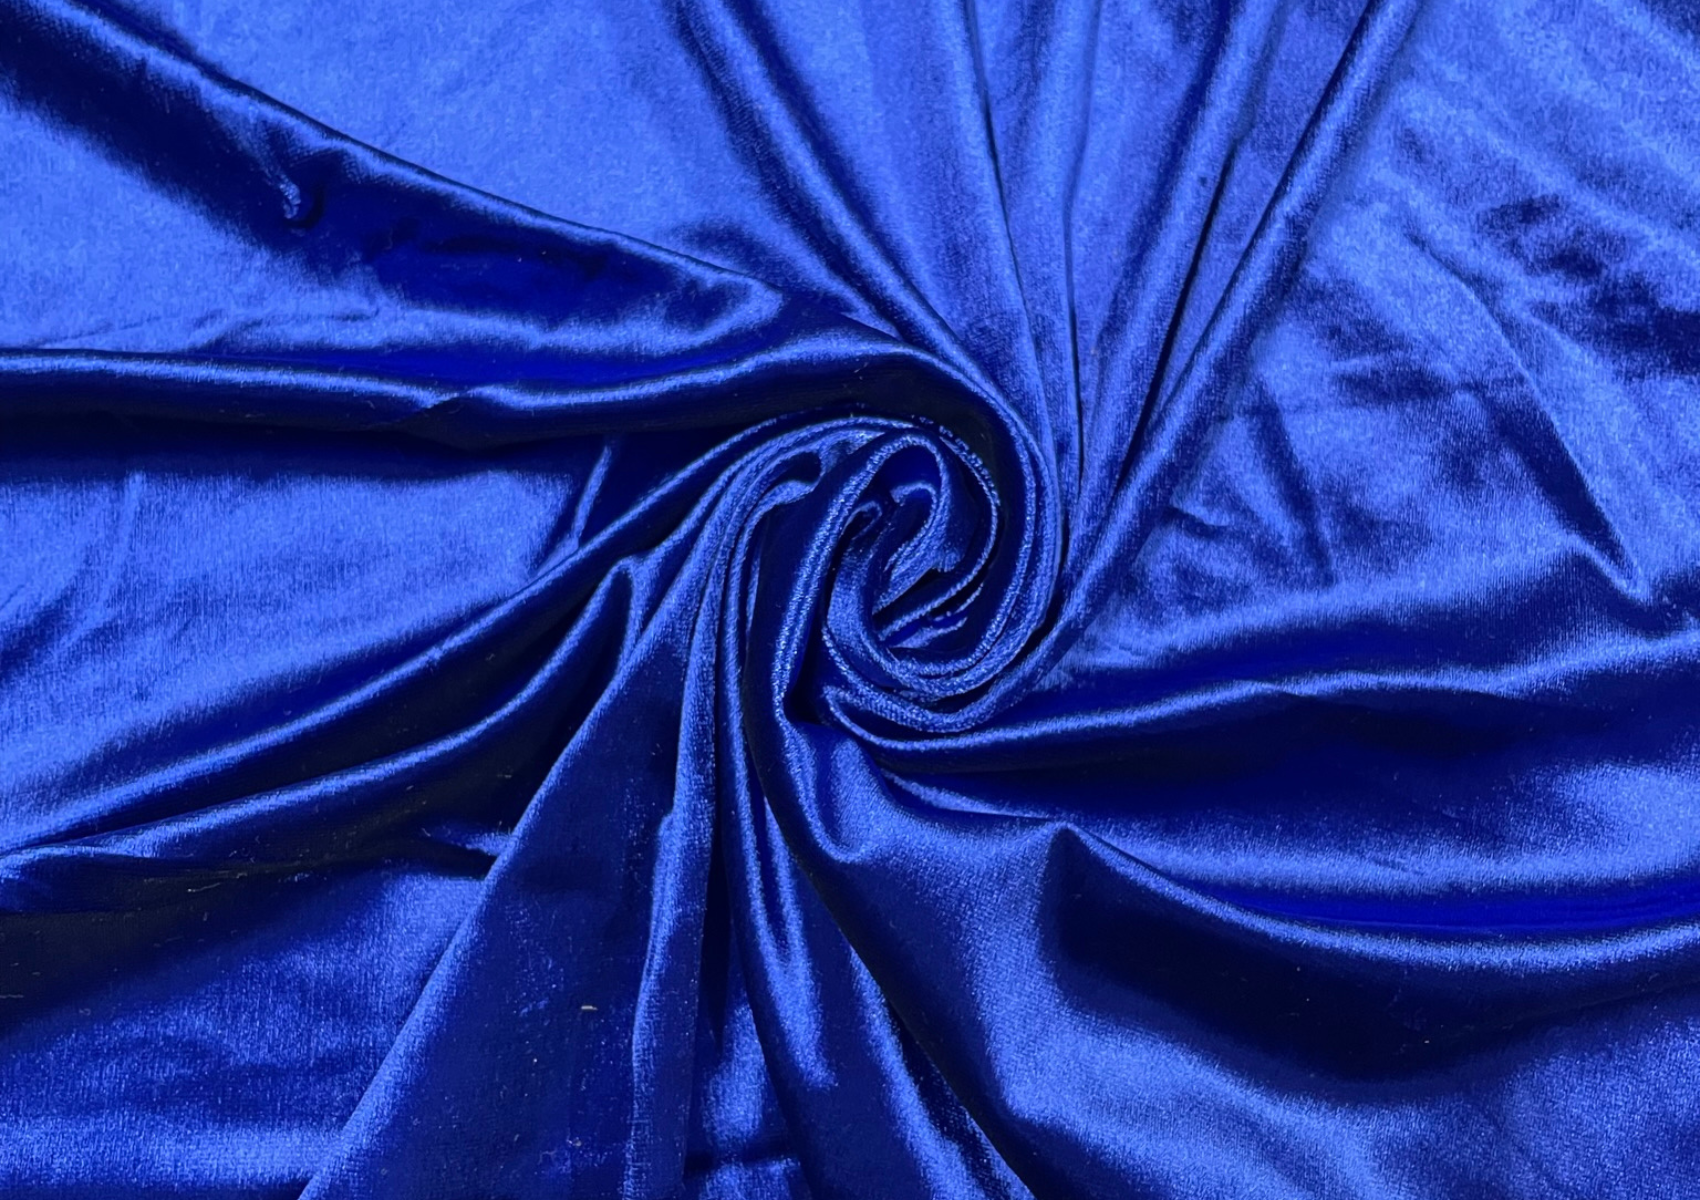 Royal Velvet Fabric | Soft and Plush Non Stretch Velvet Fabric | 60 W